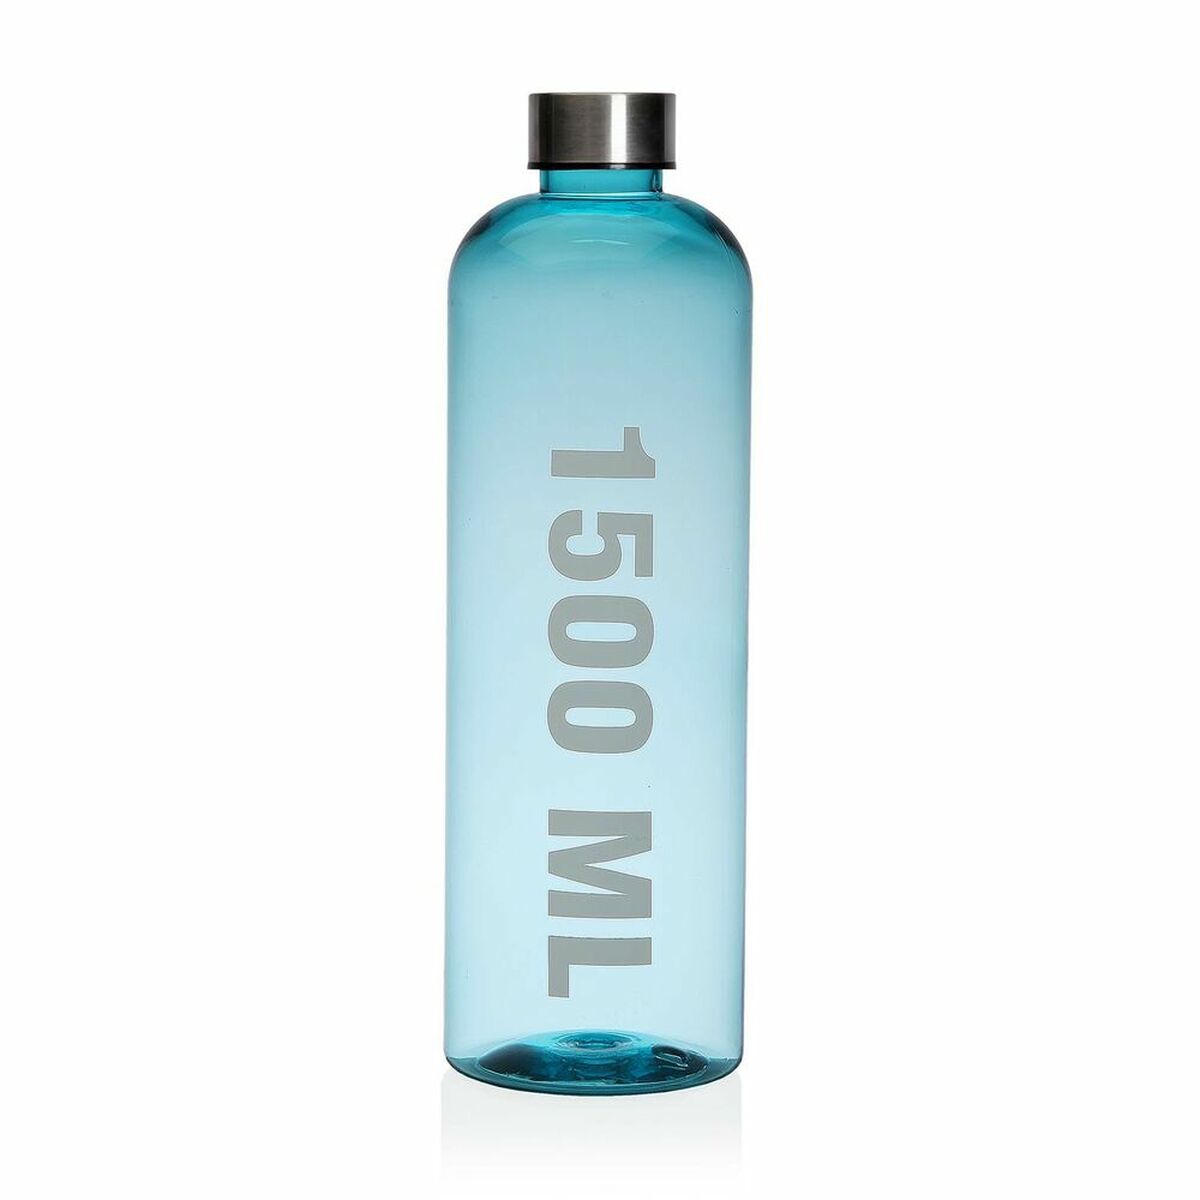 Botella de Agua Versa 1,5 L Azul Acrílico Acero Poliestireno 9 x 29 x 9 cm